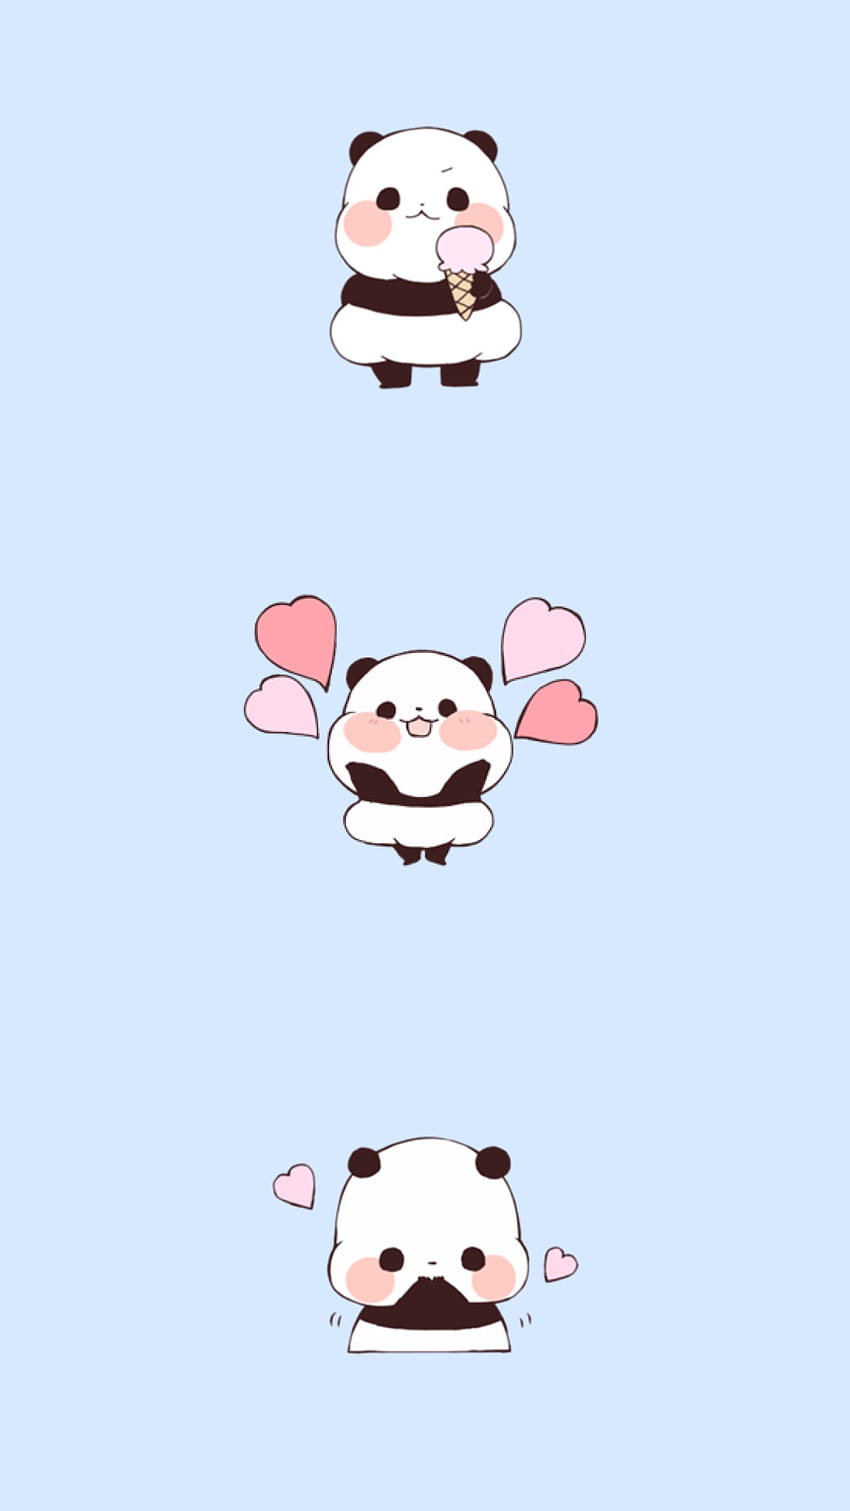 Cute Panda Wallpaper Gifts & Merchandise for Sale | Redbubble